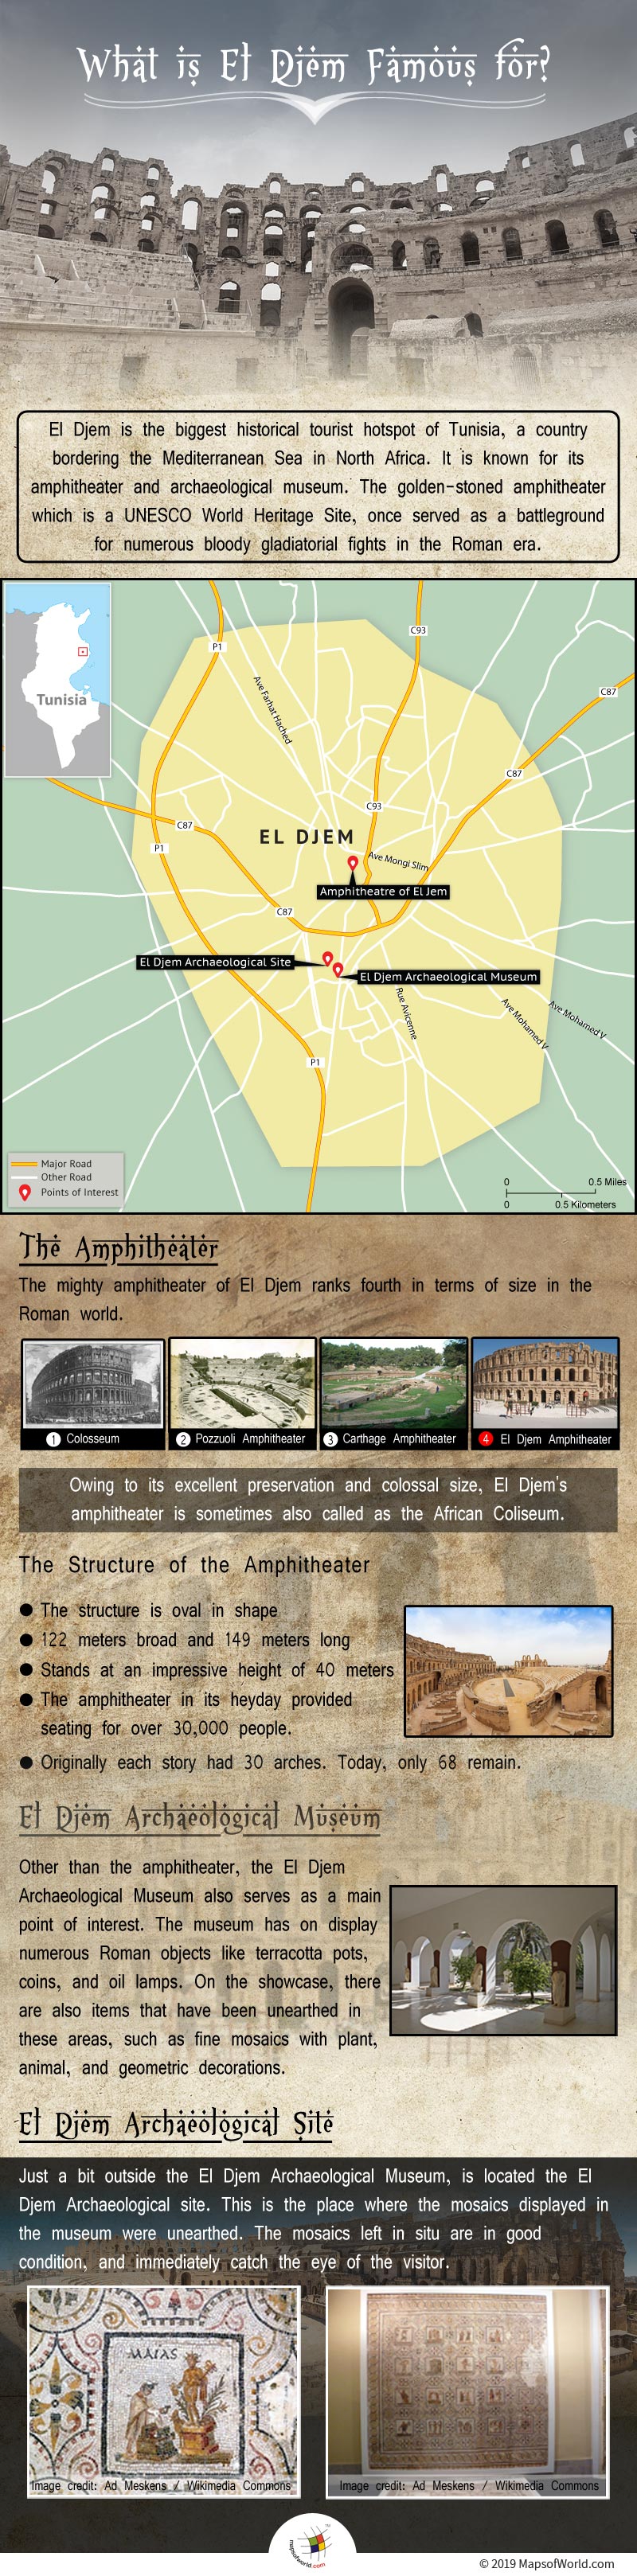 Infographic Giving Details on El Djem Famous Sites